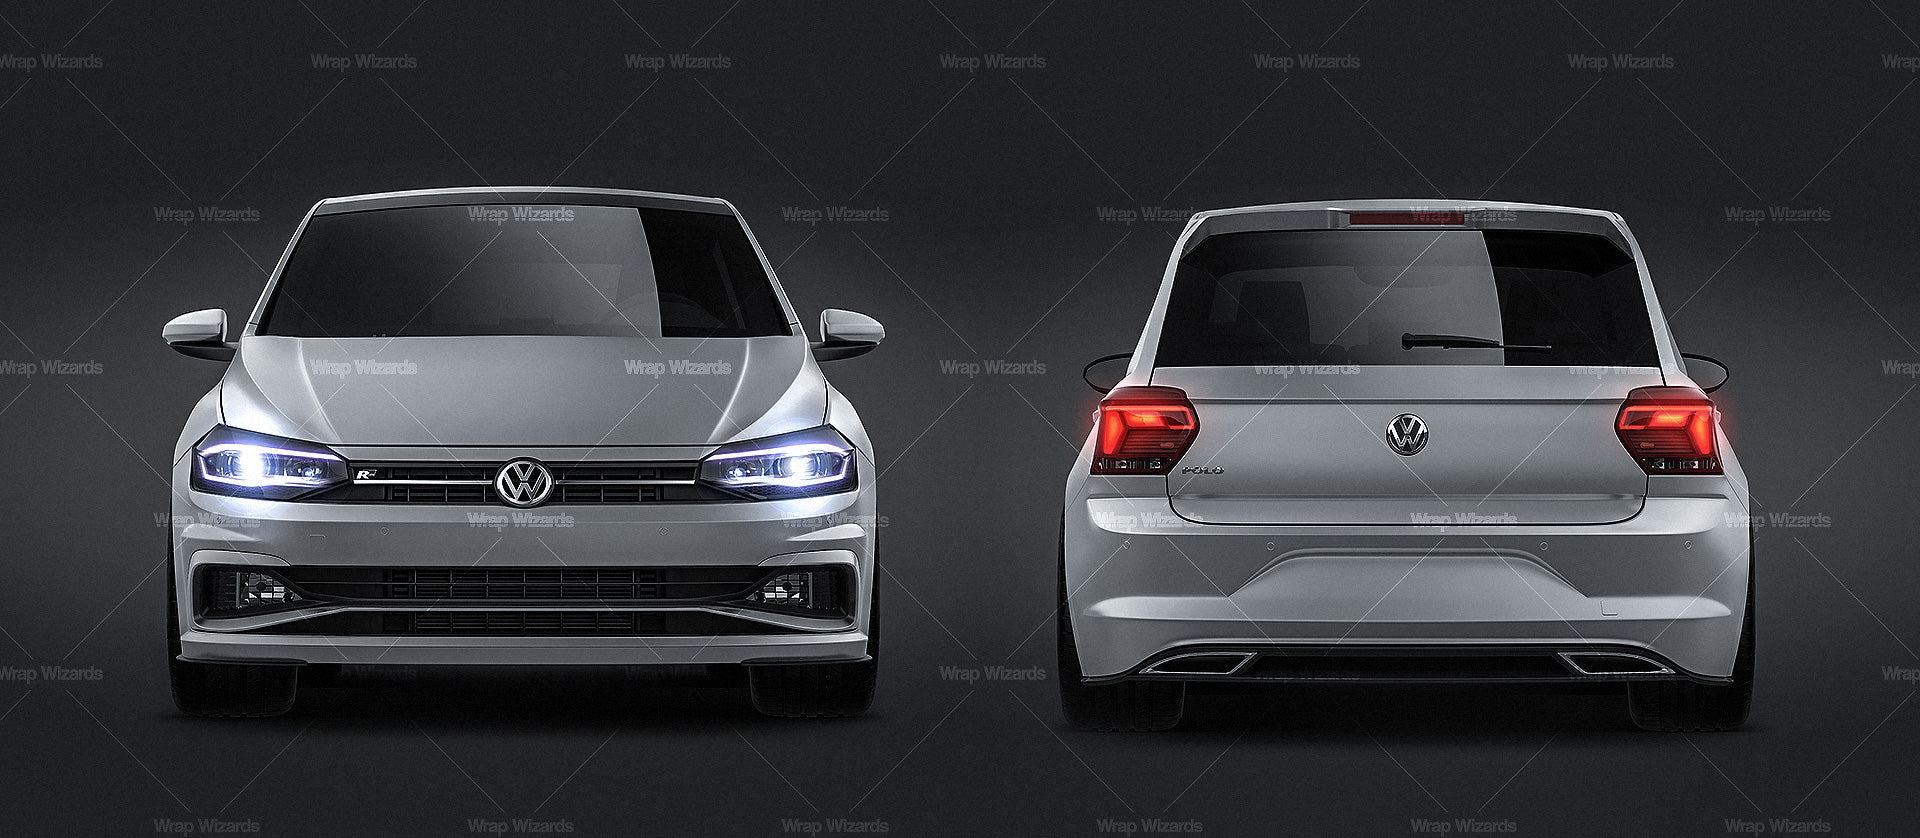 Volkswagen Polo R-Line 2018 - Car Mockup